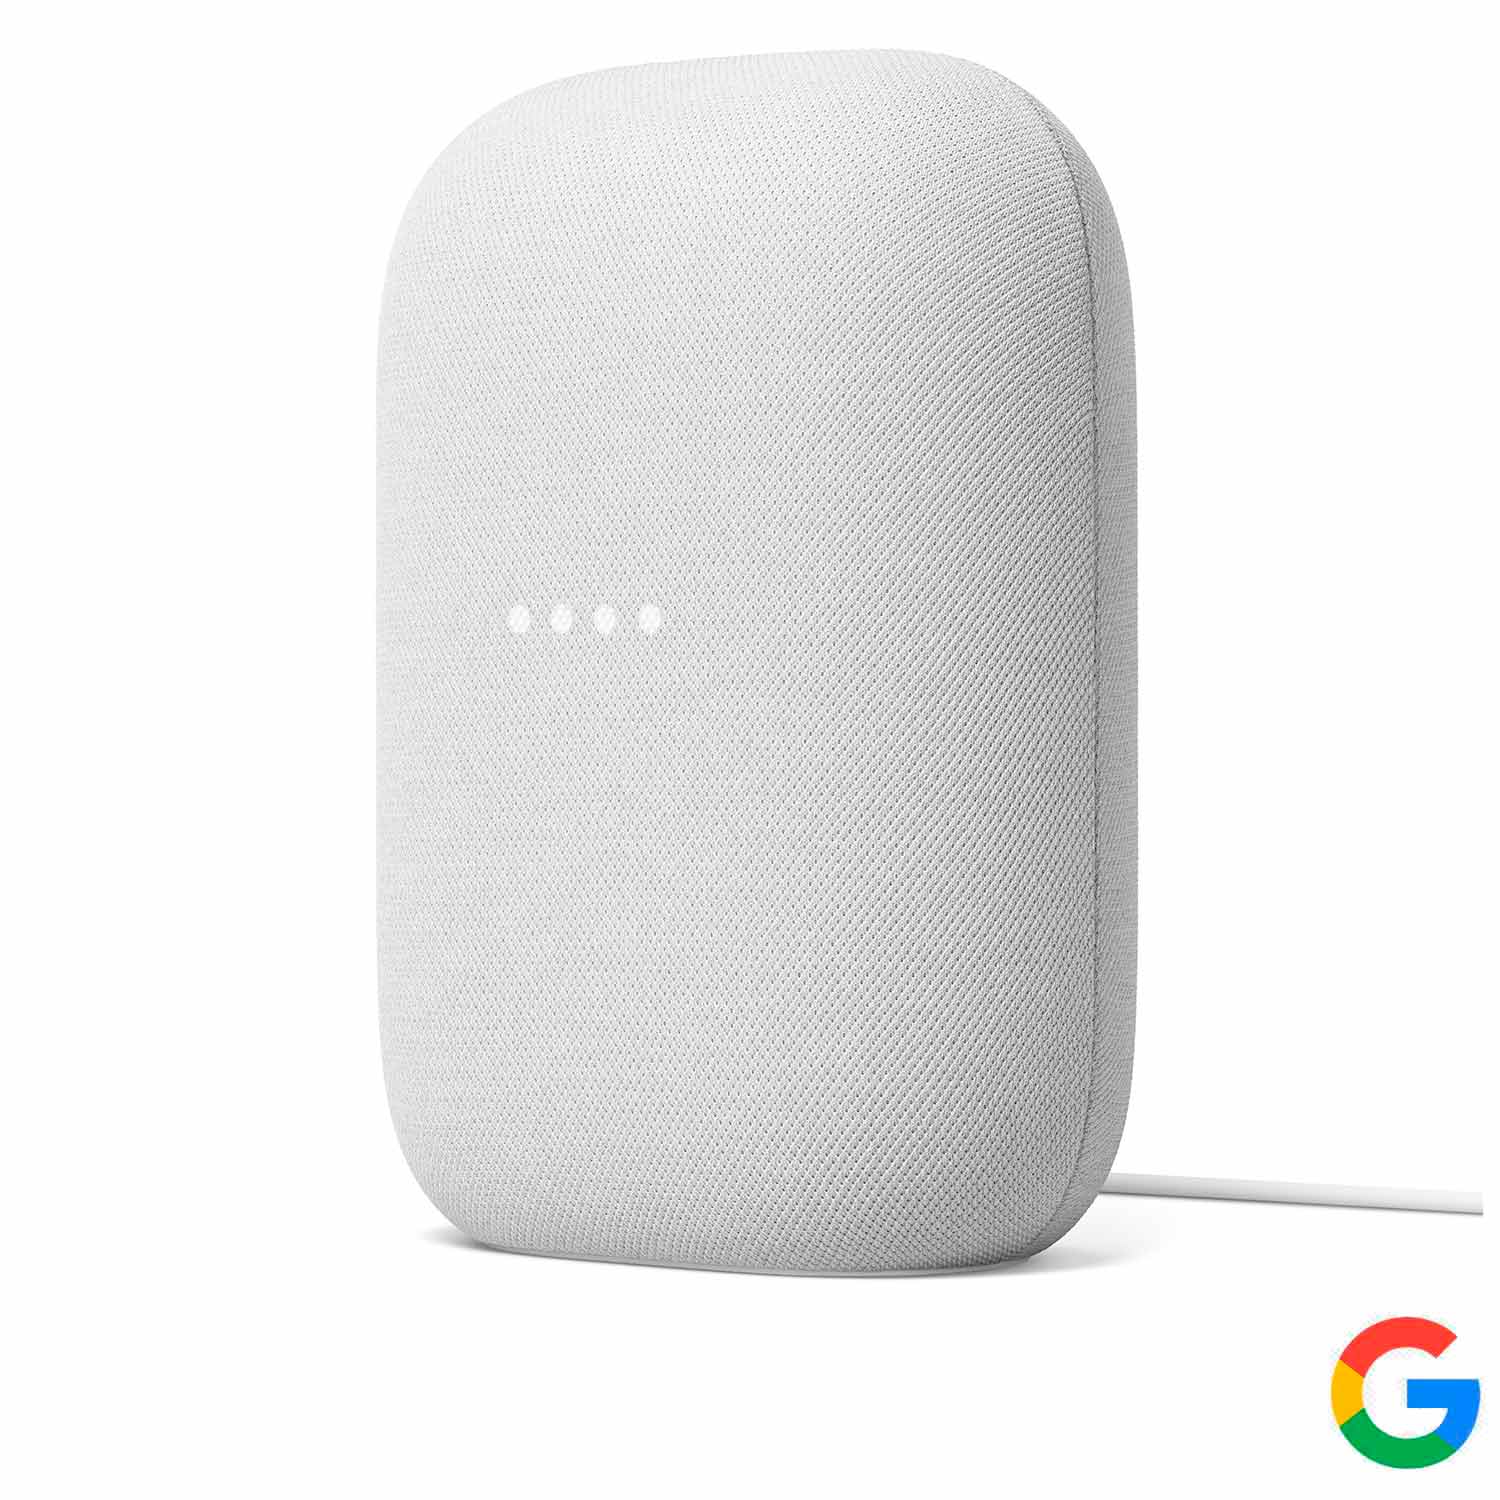 Smart speaker Nest Audio, da Google